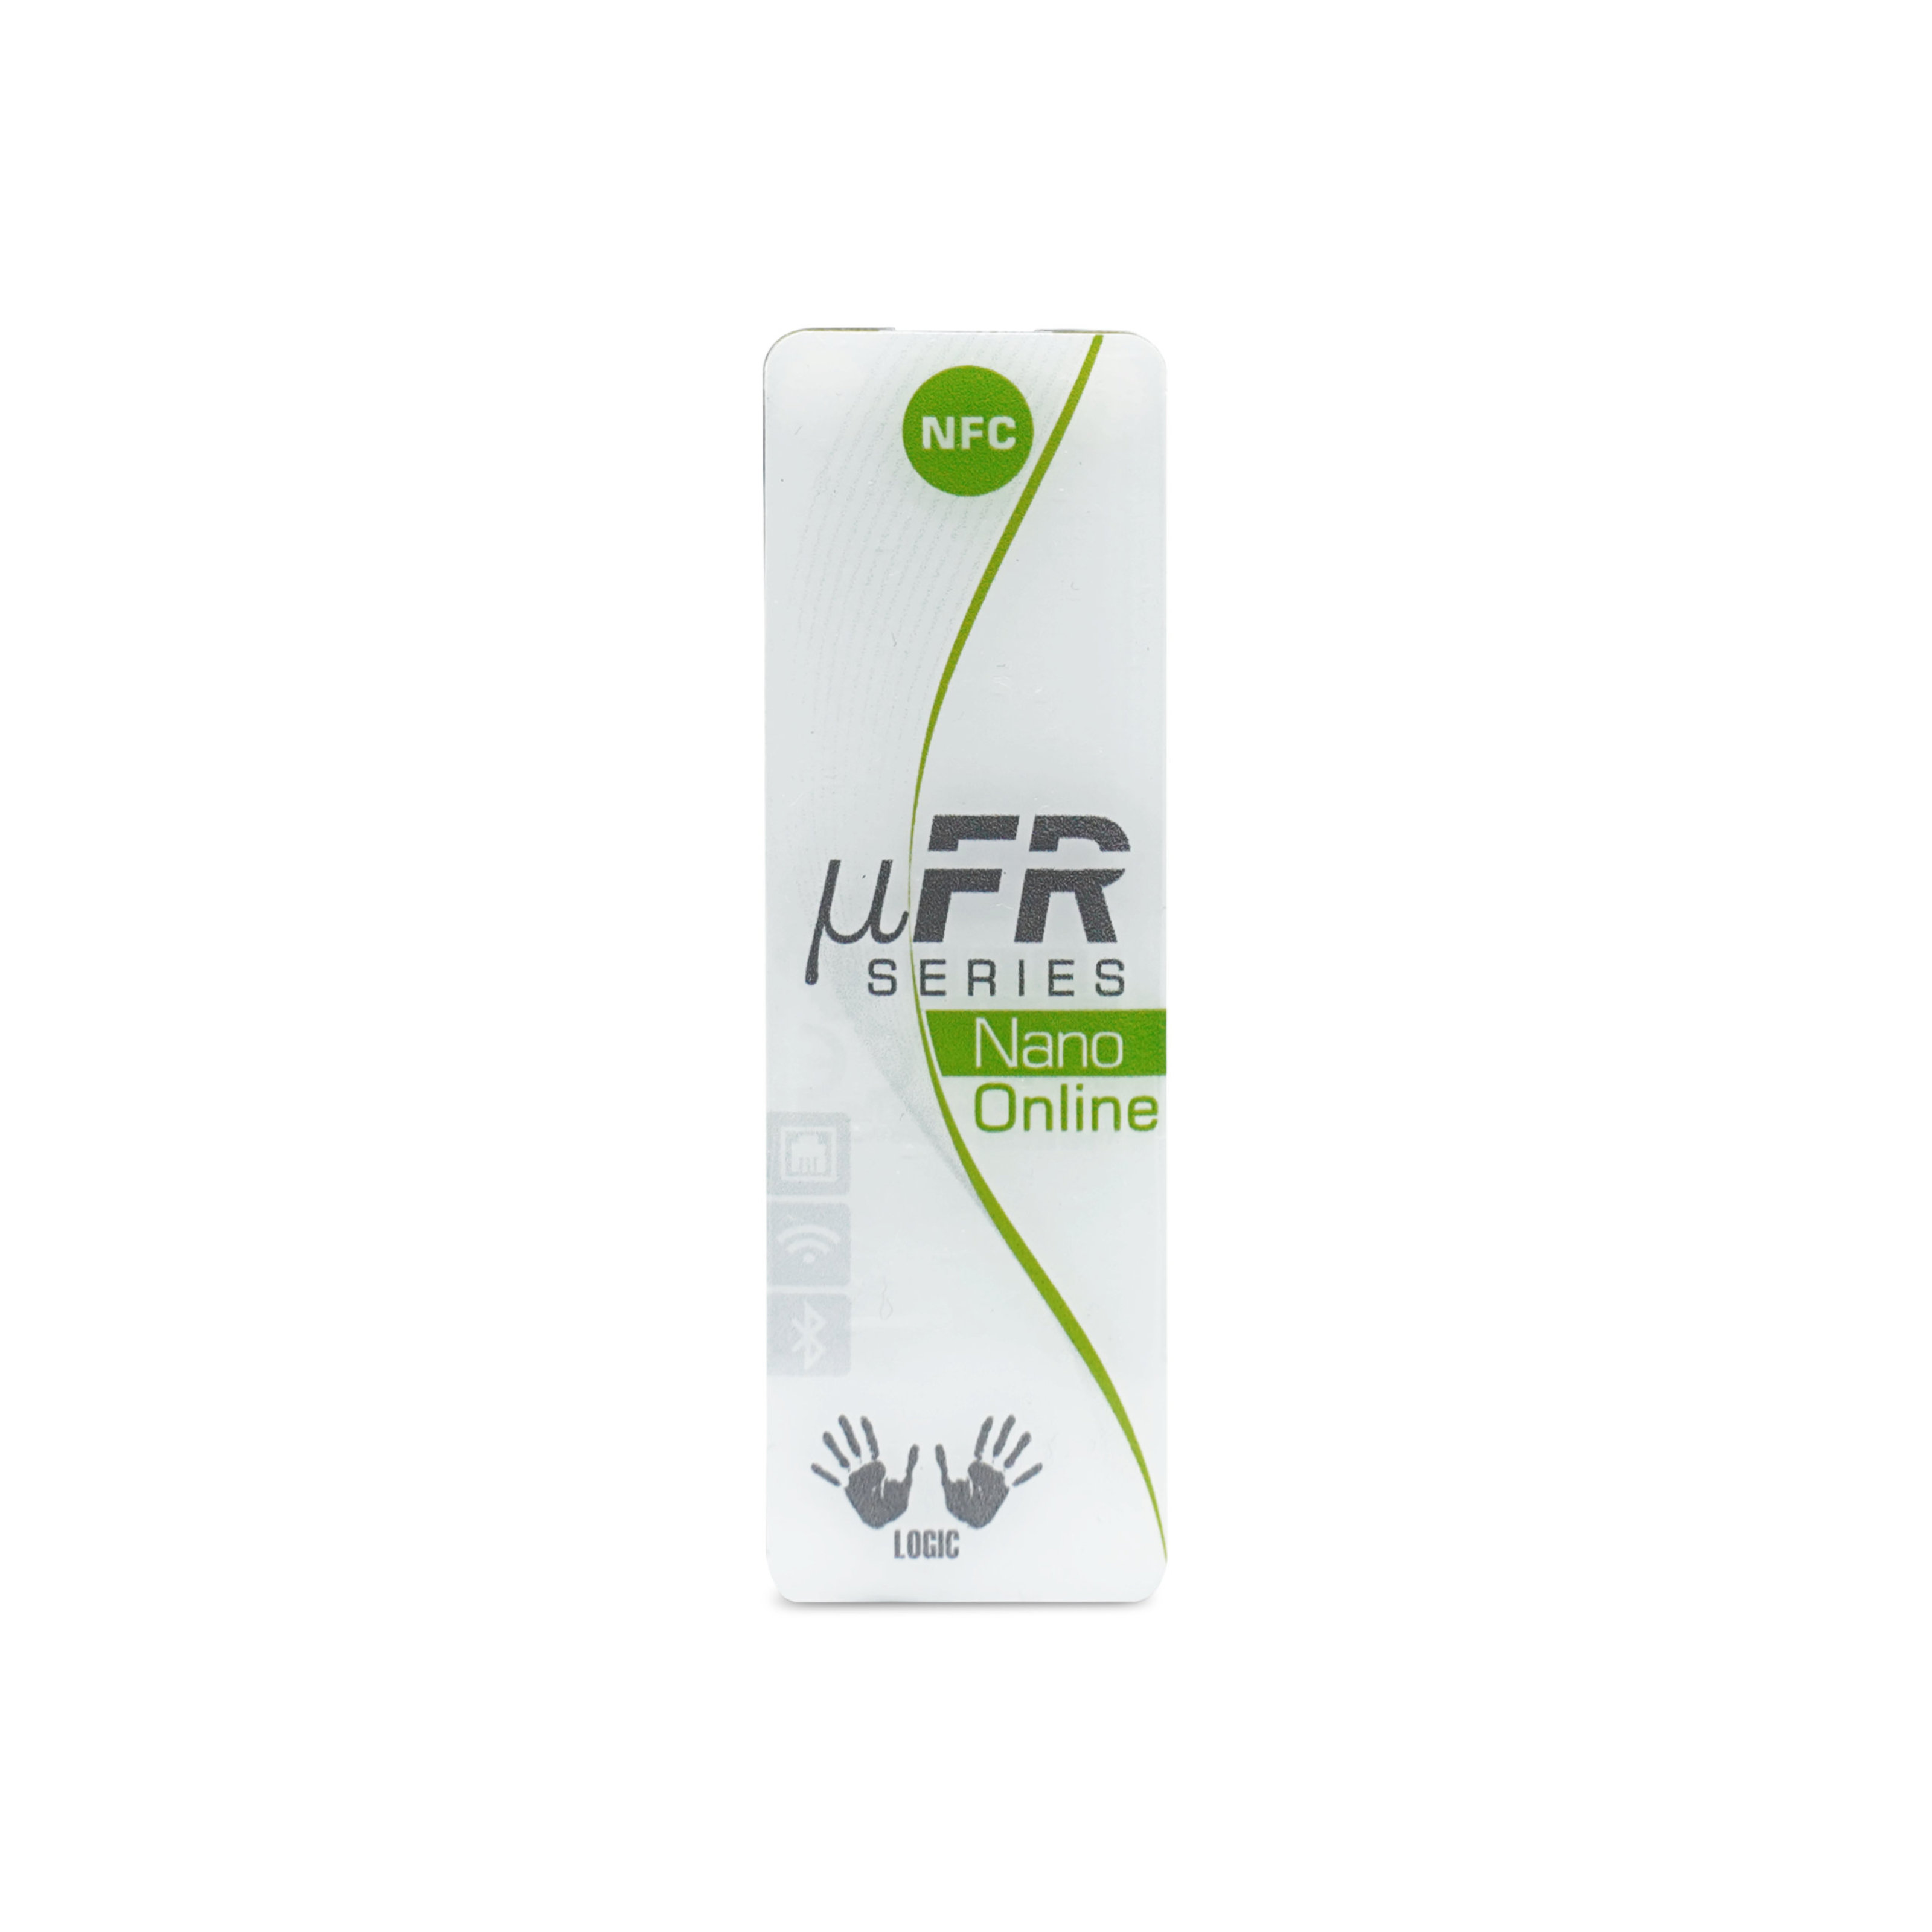 NFC Reader / Writer uFR Nano Online - white / green - WiFi, Bluethooth, USB